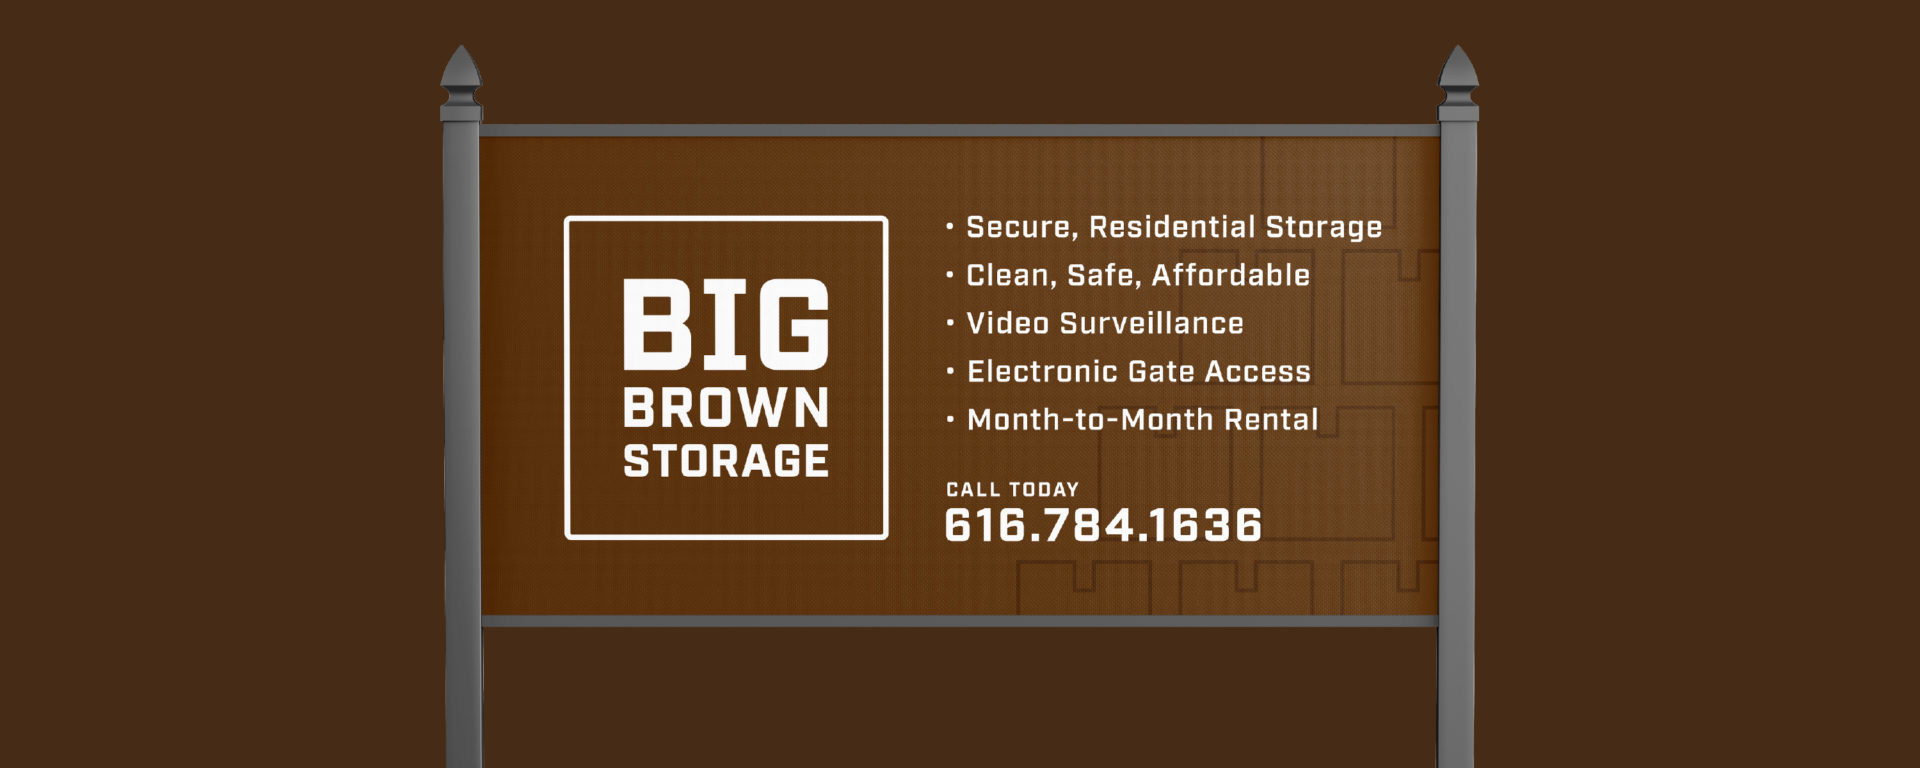 Big Brown Storage sign